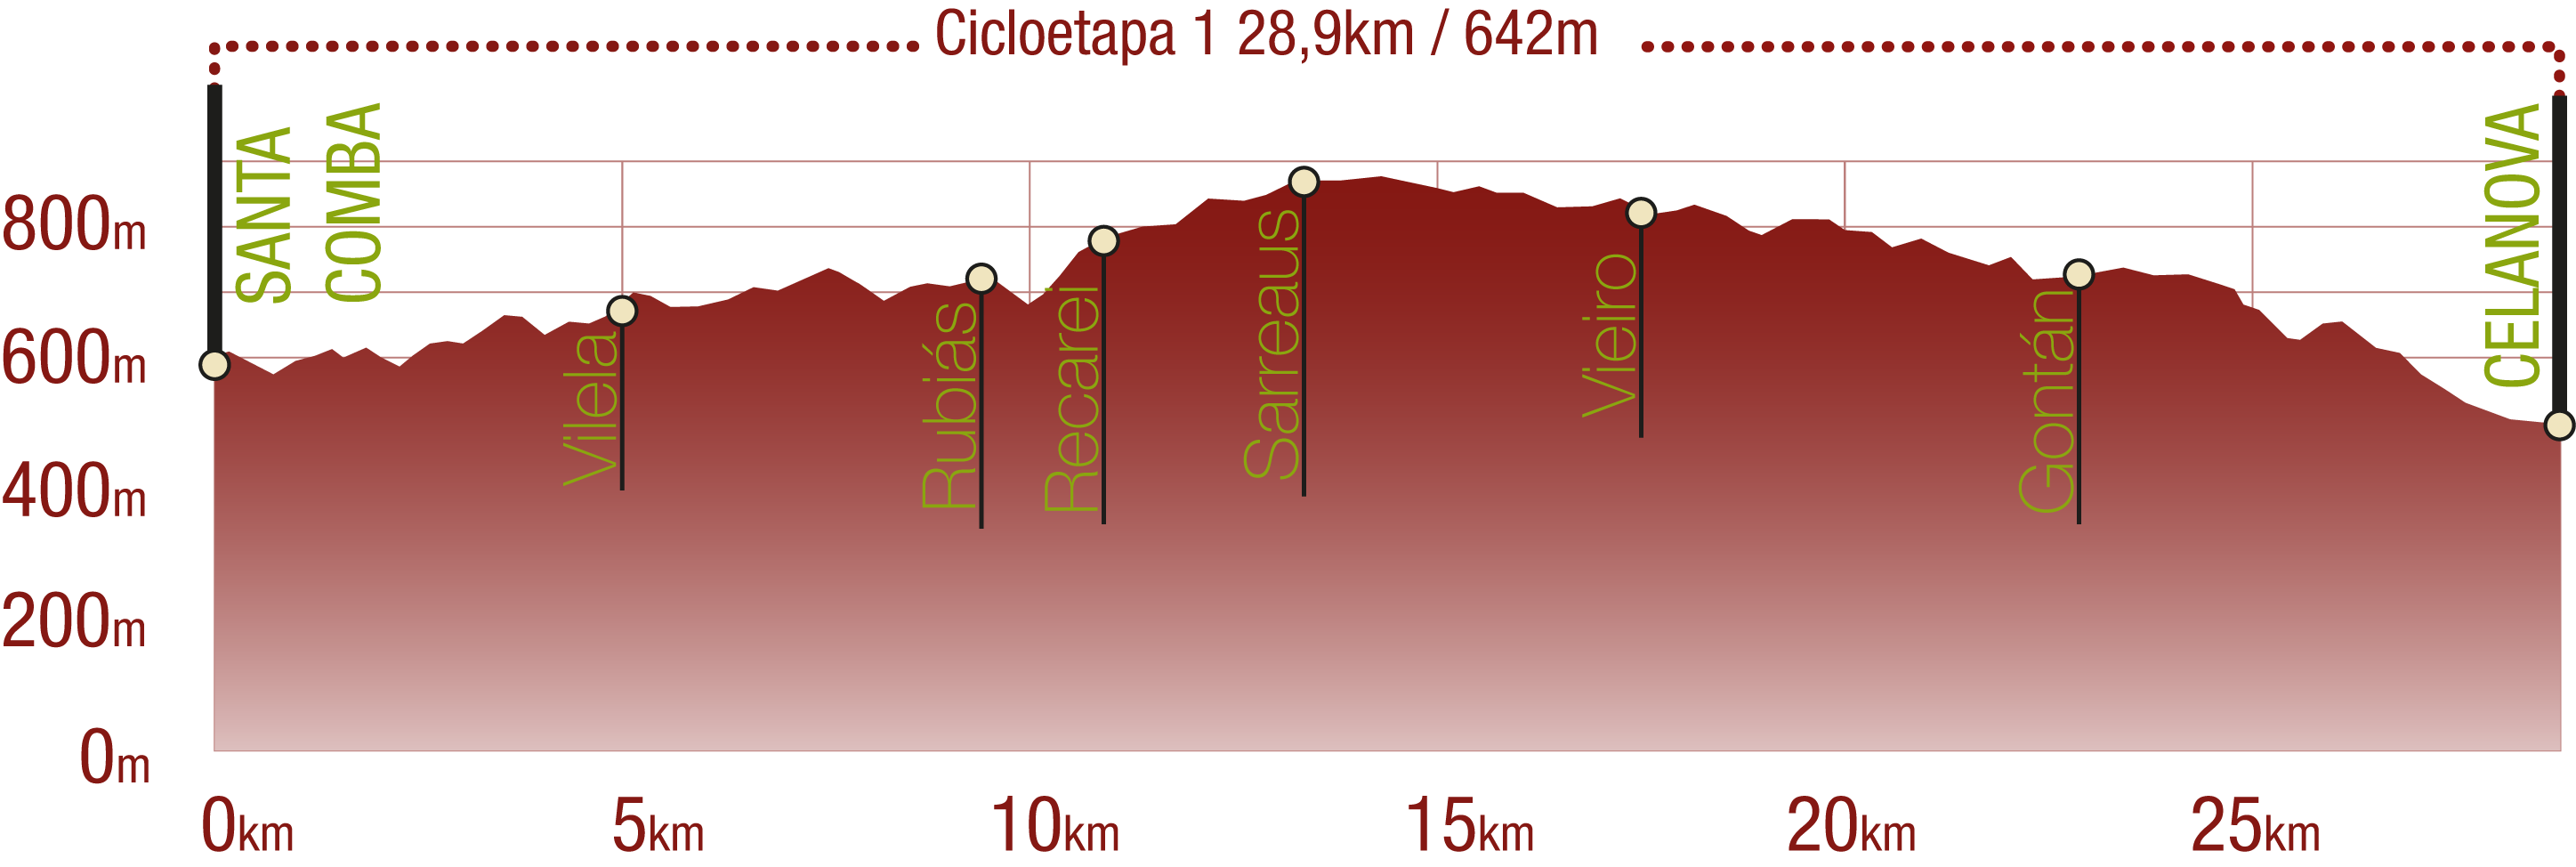 Perfil 
Perfil de la Cicloetapa 1 del CN de San Rosendo: 28,9 km / Desnivel de subida 642 m

